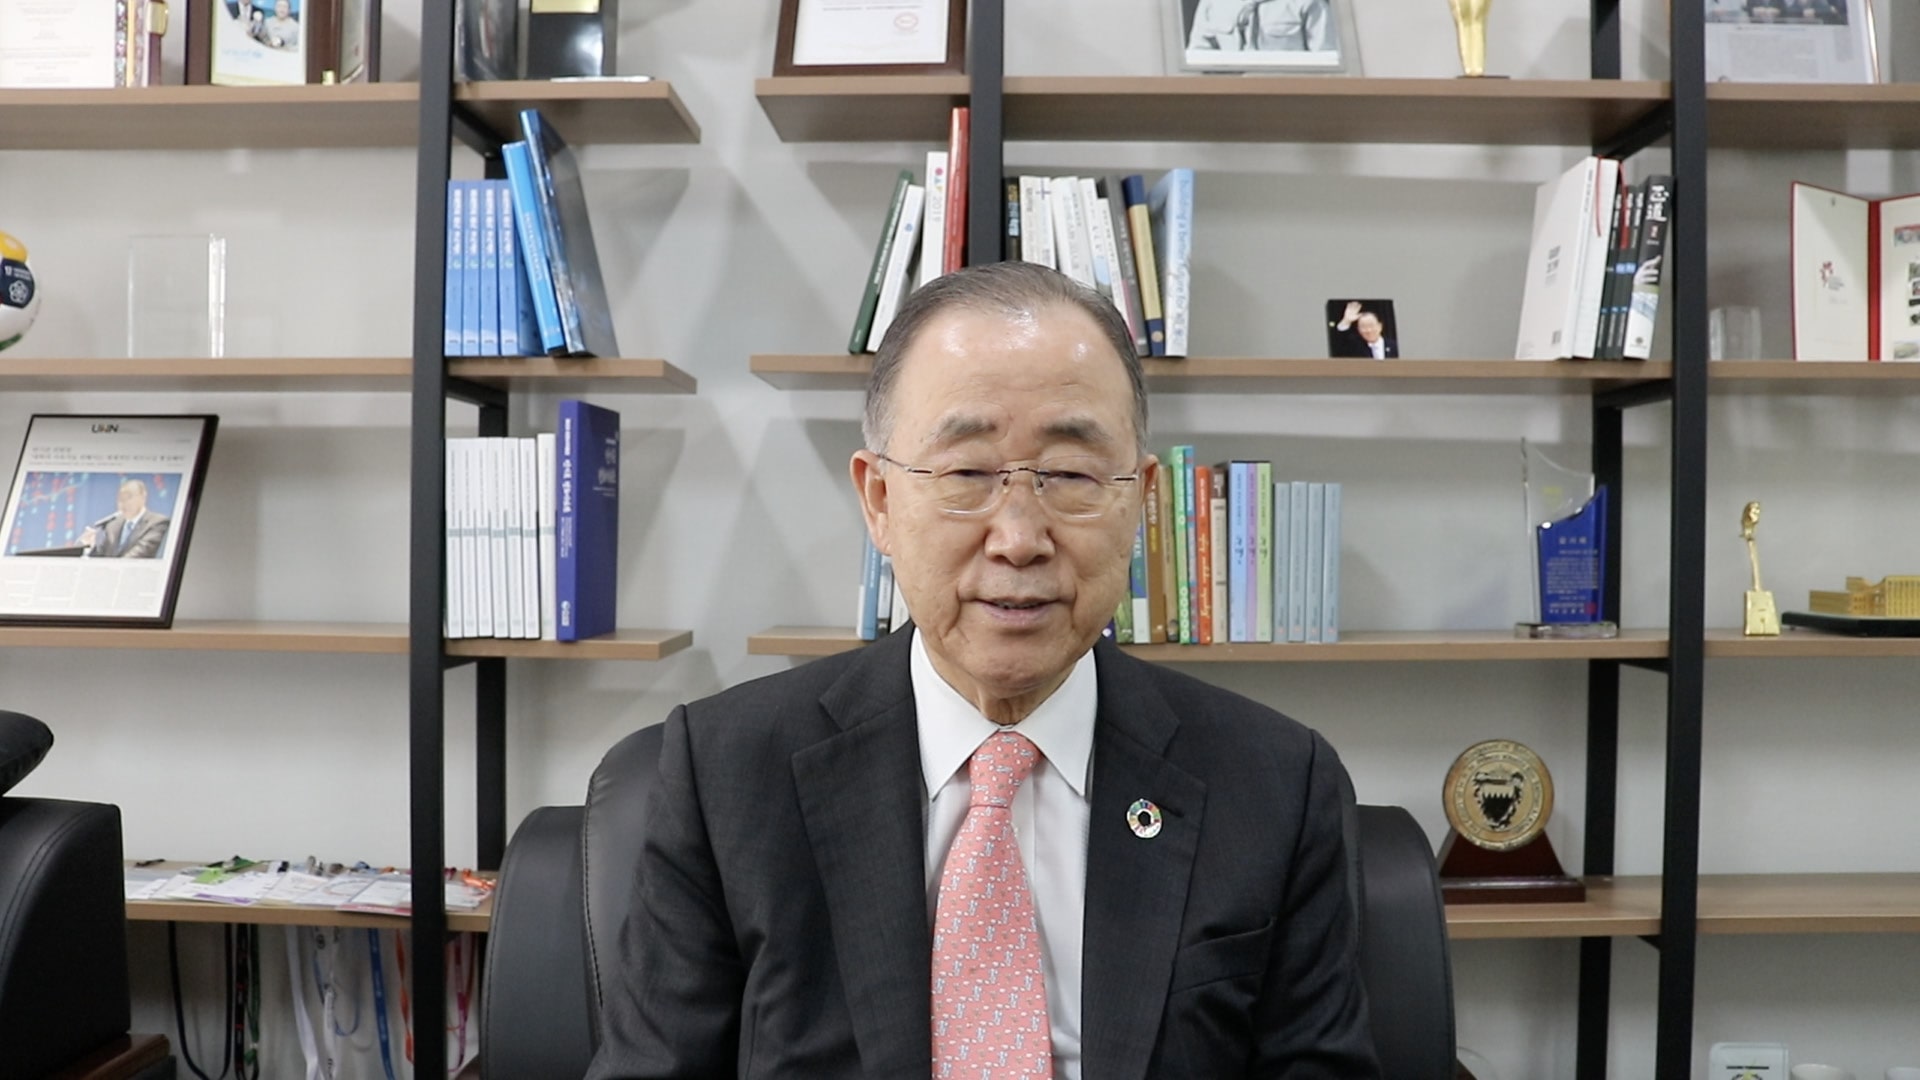 Ban Ki Moon addresses MCI alumni during their virtual graduation ceremony. (c)MCI